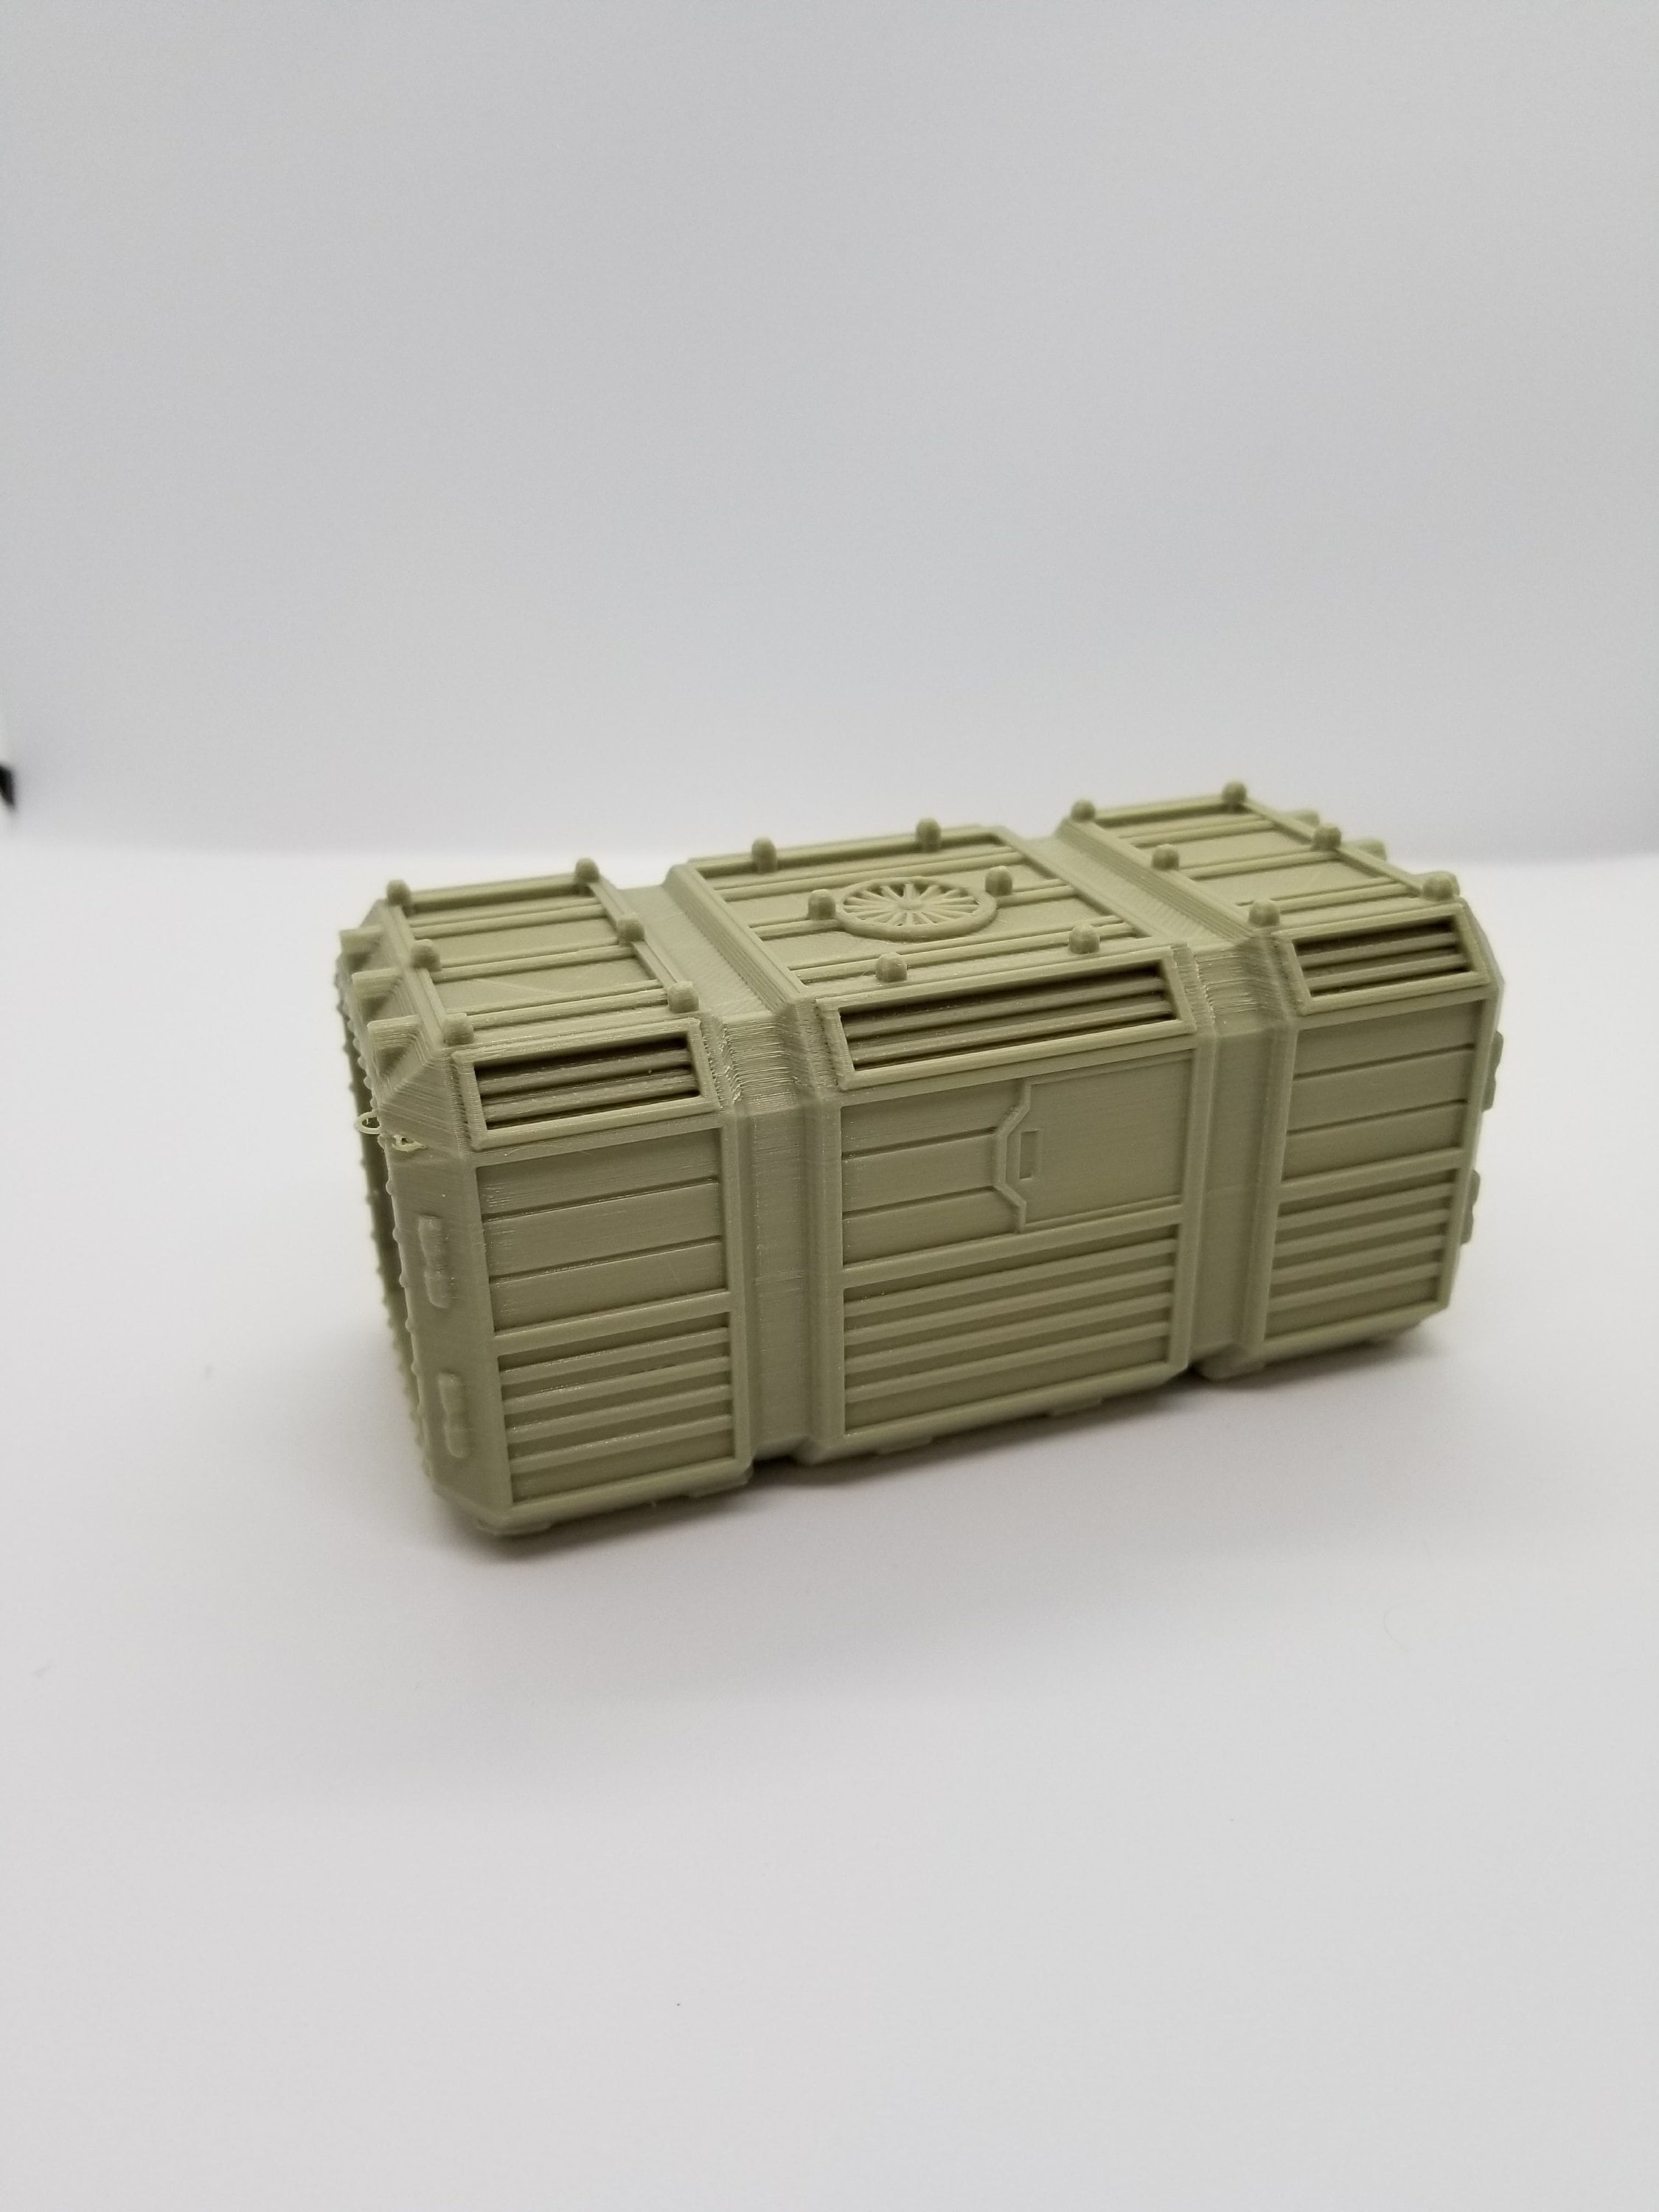 Warlayer / 3d Printed Sci-Fi Standard Crate / 28mm Wargaming Terrain / Print to Order / Licensed Printer